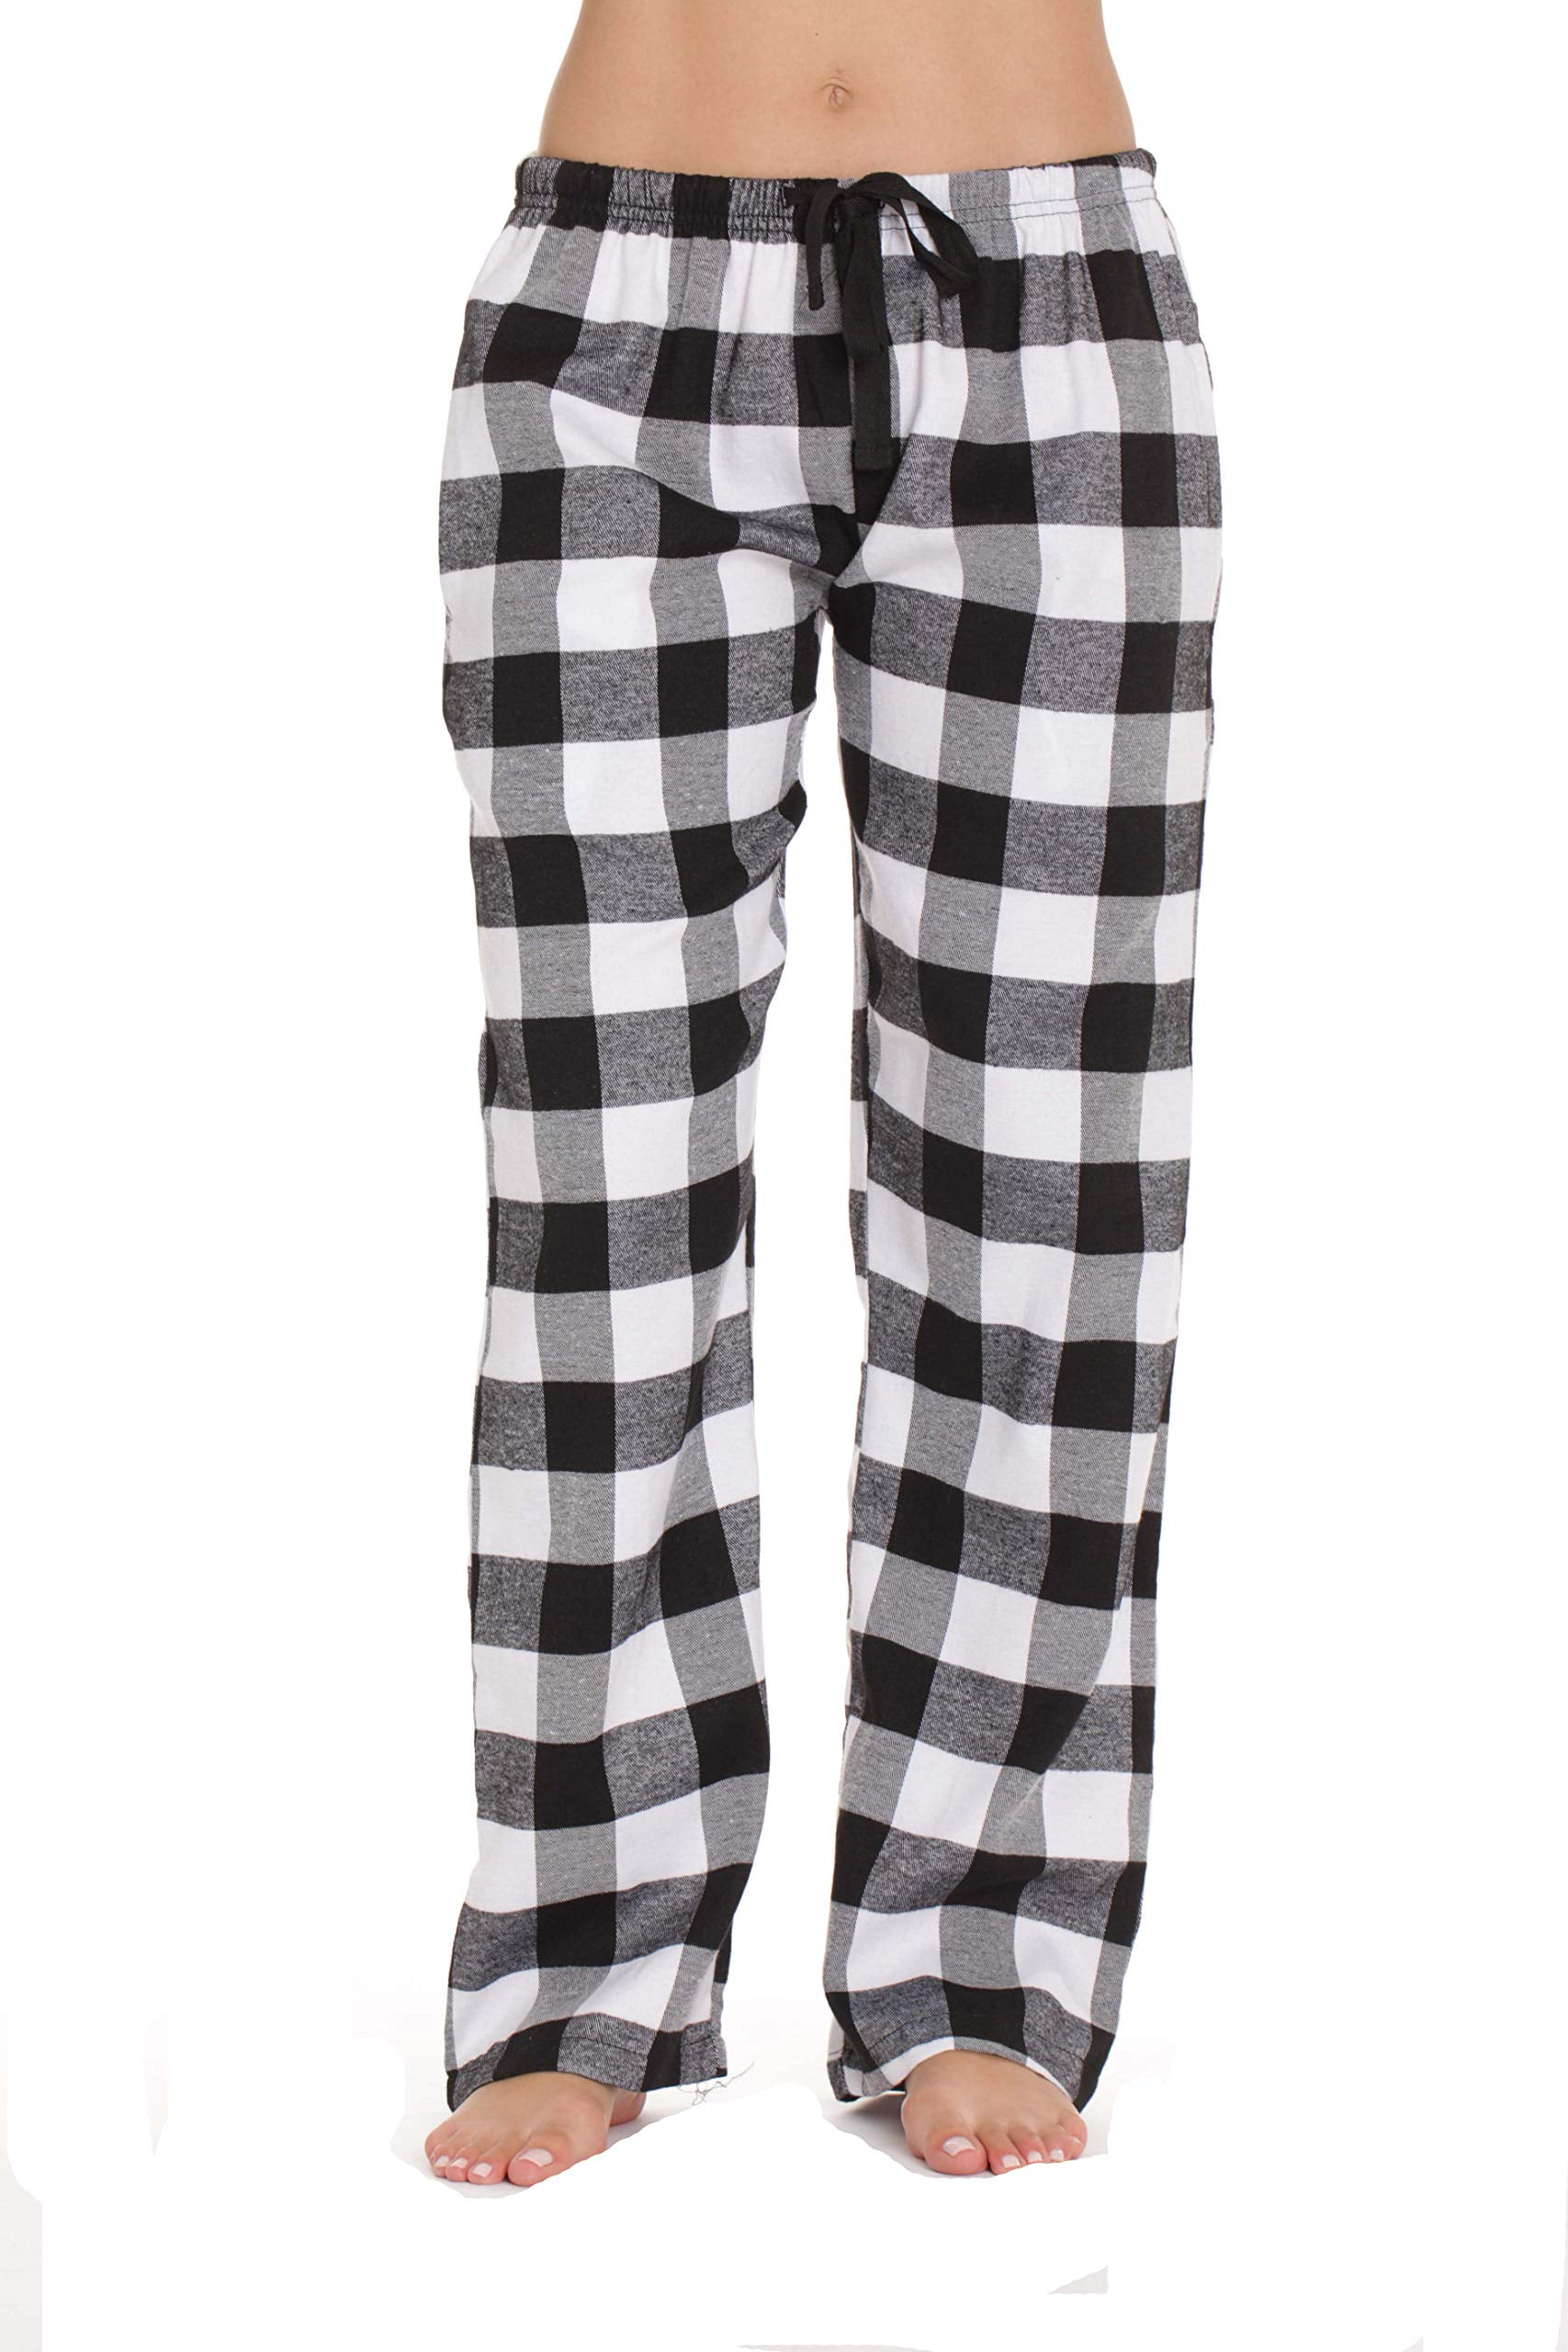 #followme Buffalo Plaid Flannel Pajama Pants for Women with Pockets (White  - Buffalo Plaid, X-Large)